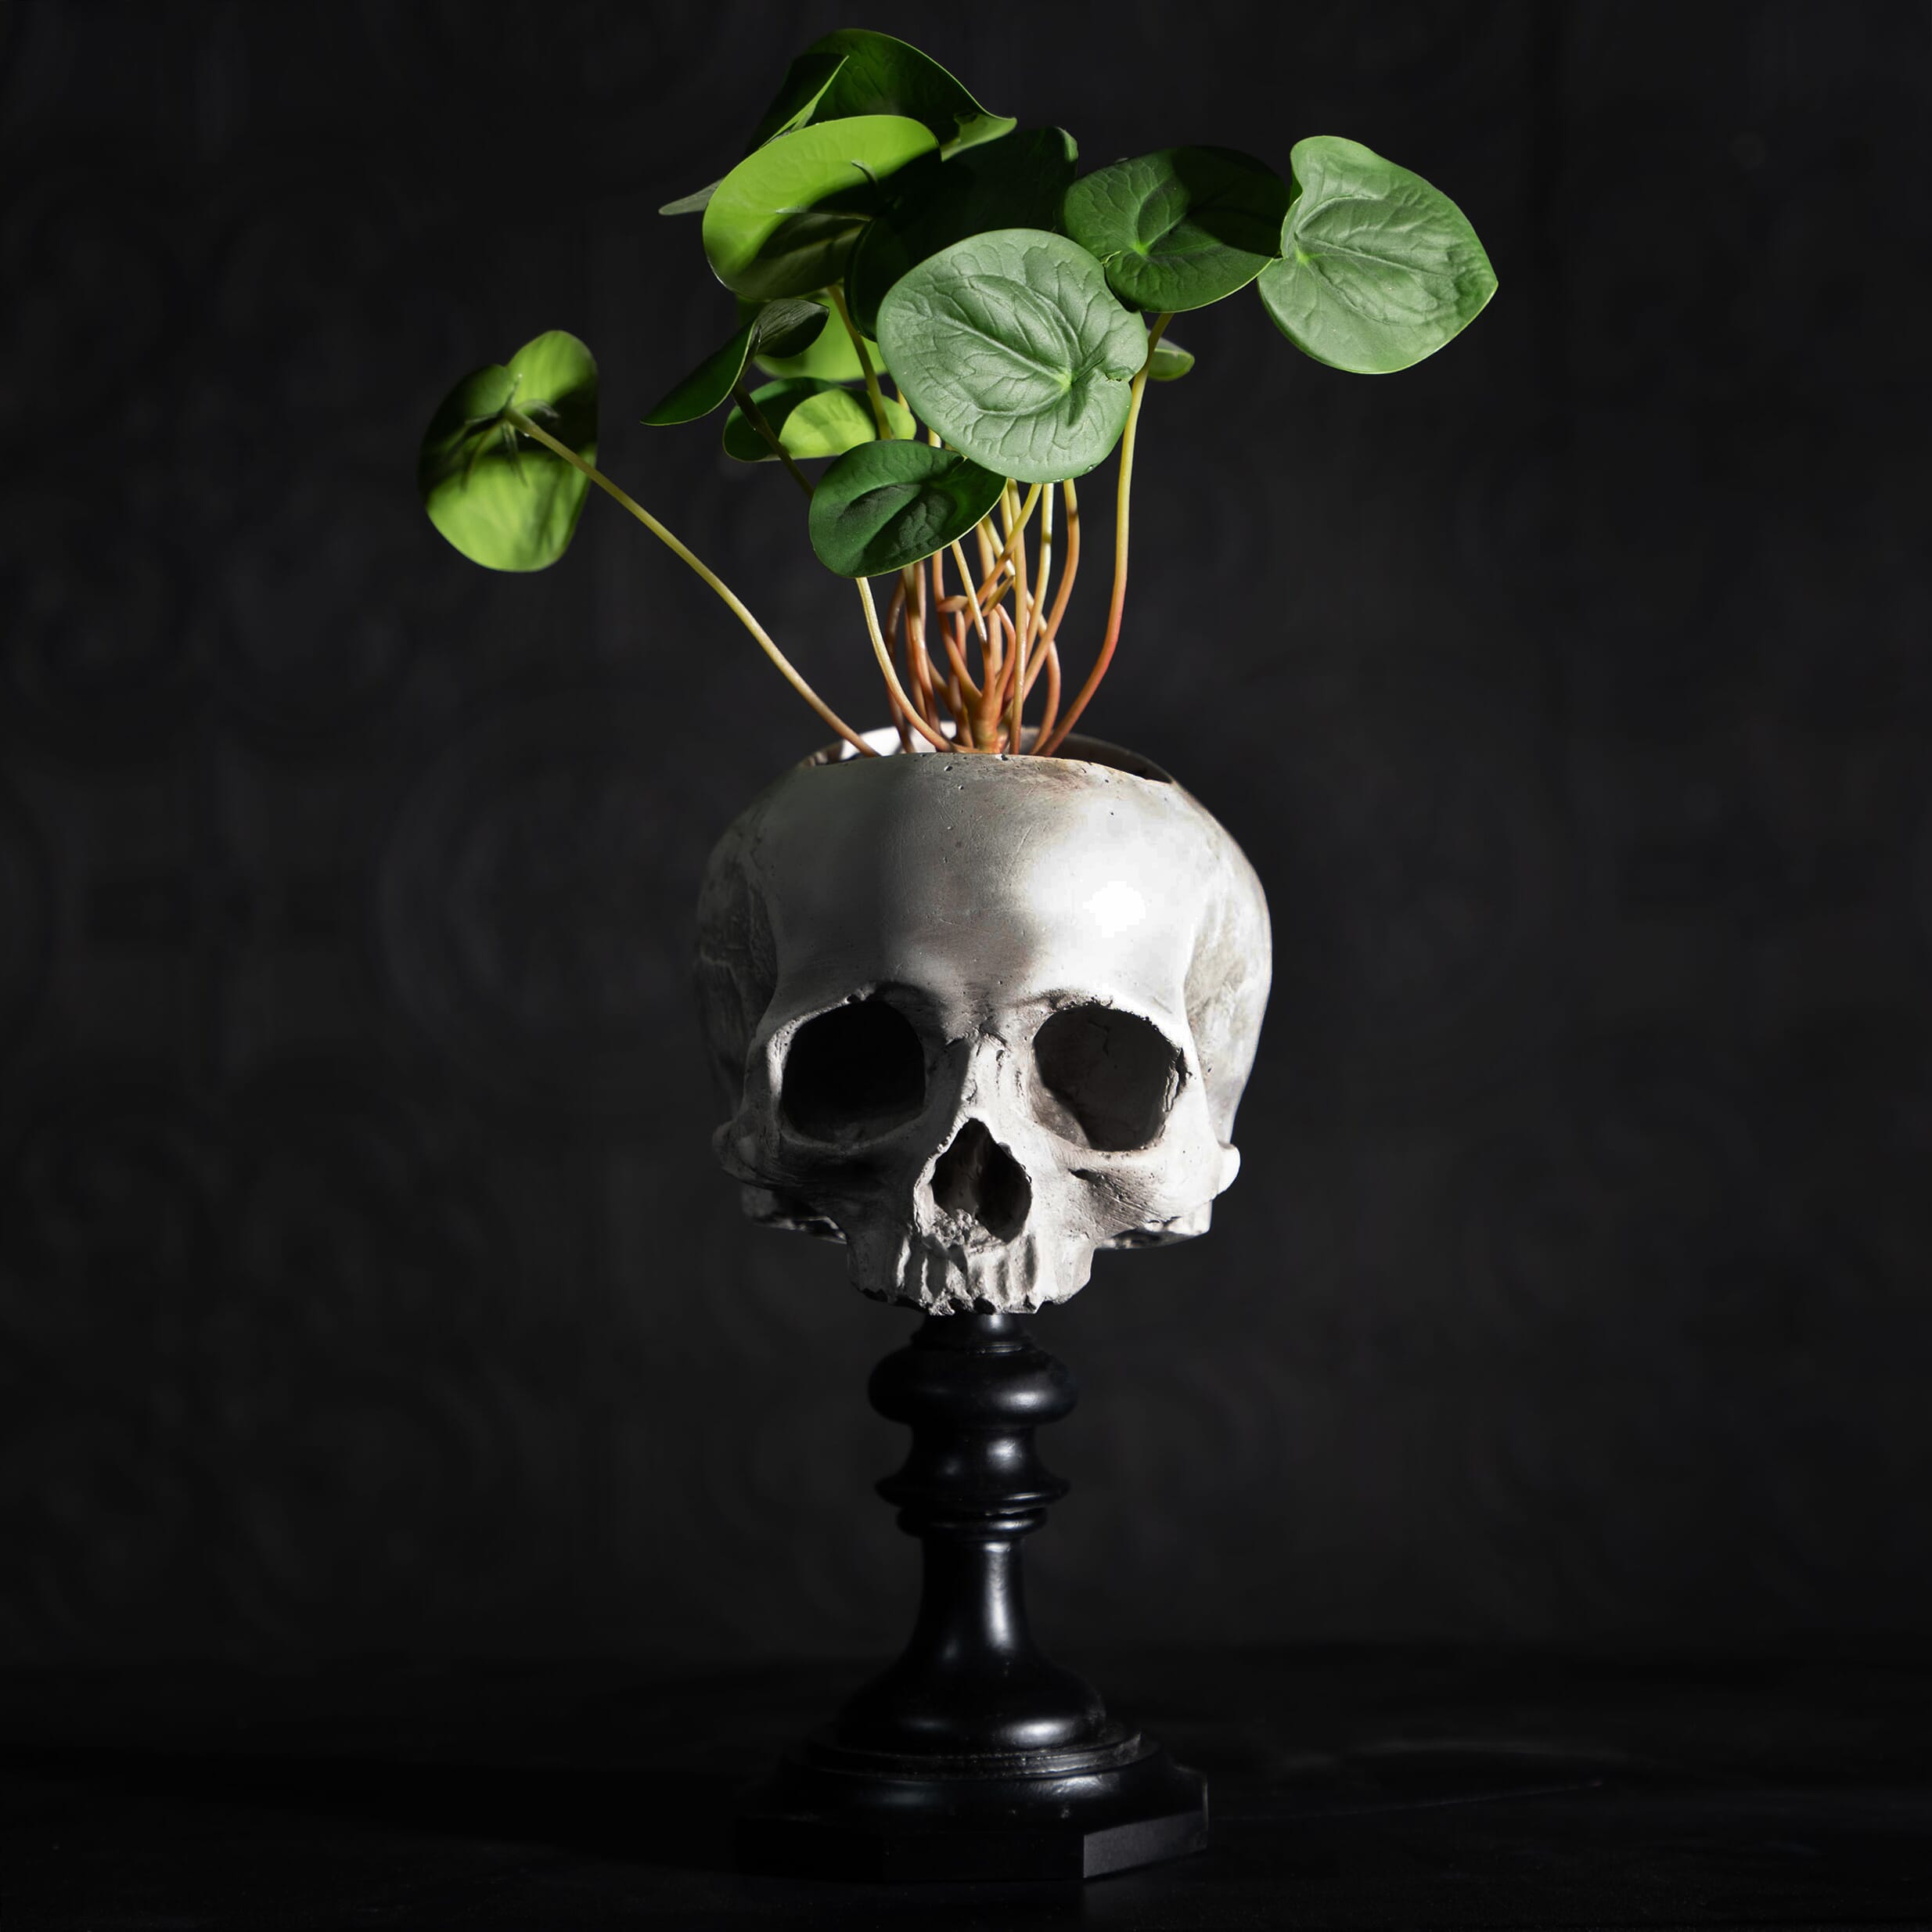 Skull of j.doe pot plinth ornament - The Blackened Teeth - Gothic home decor